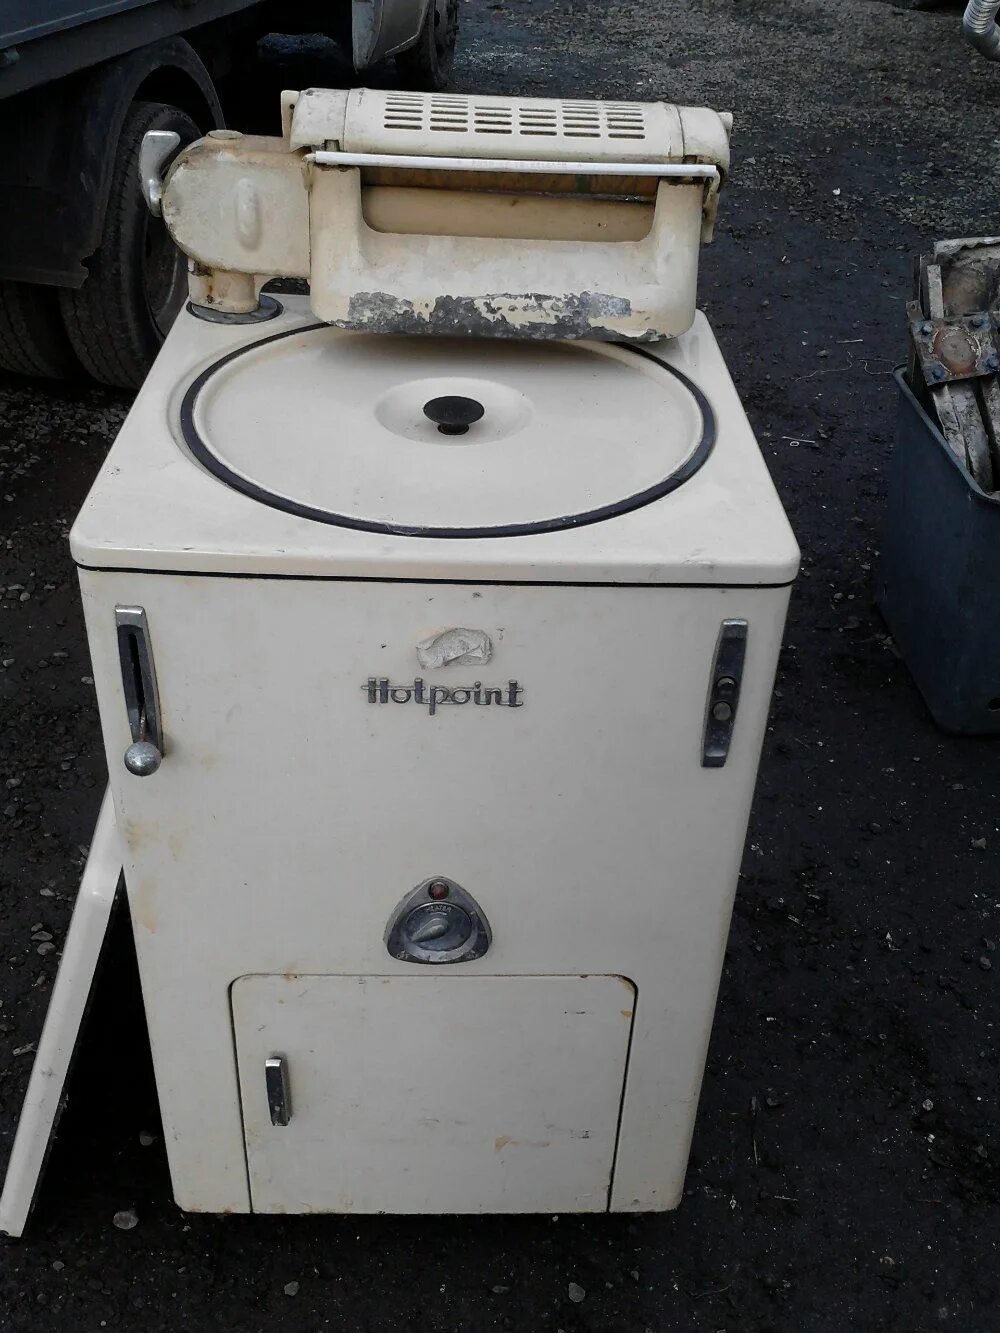 Первая стиральная машина автомат. Вятка первая стиральная машина. Советская стиральная машина Вятка автомат. Стиральная машина BENDIX 1947. Стиральная машина "ЭАЯ-2"(1955).